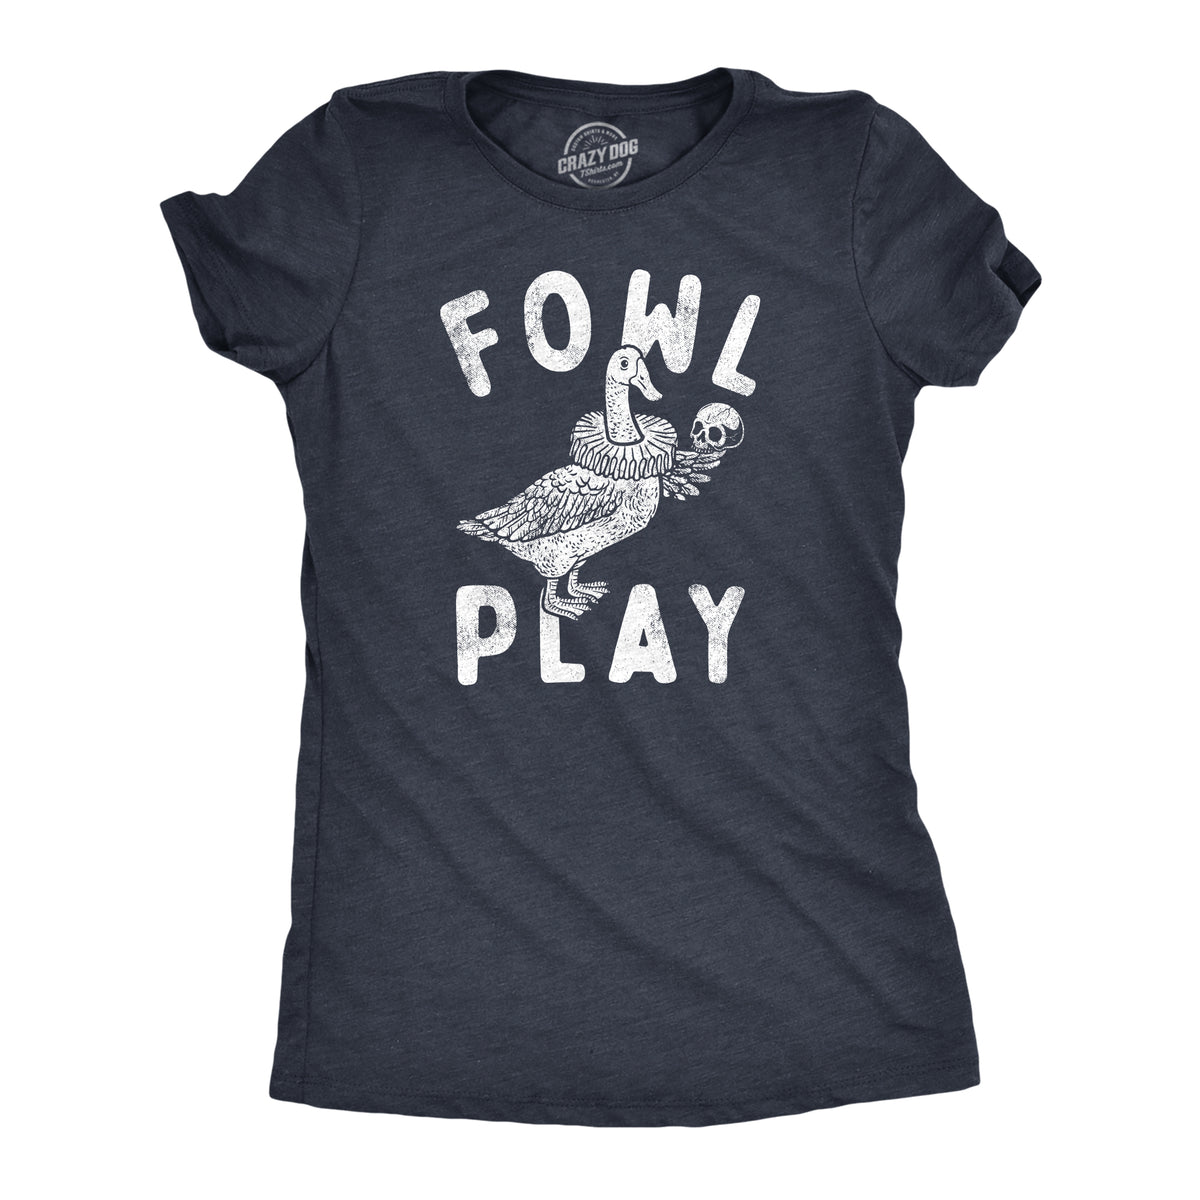 Funny Heather Navy - FOWL Fowl Play Womens T Shirt Nerdy Sarcastic Animal Tee